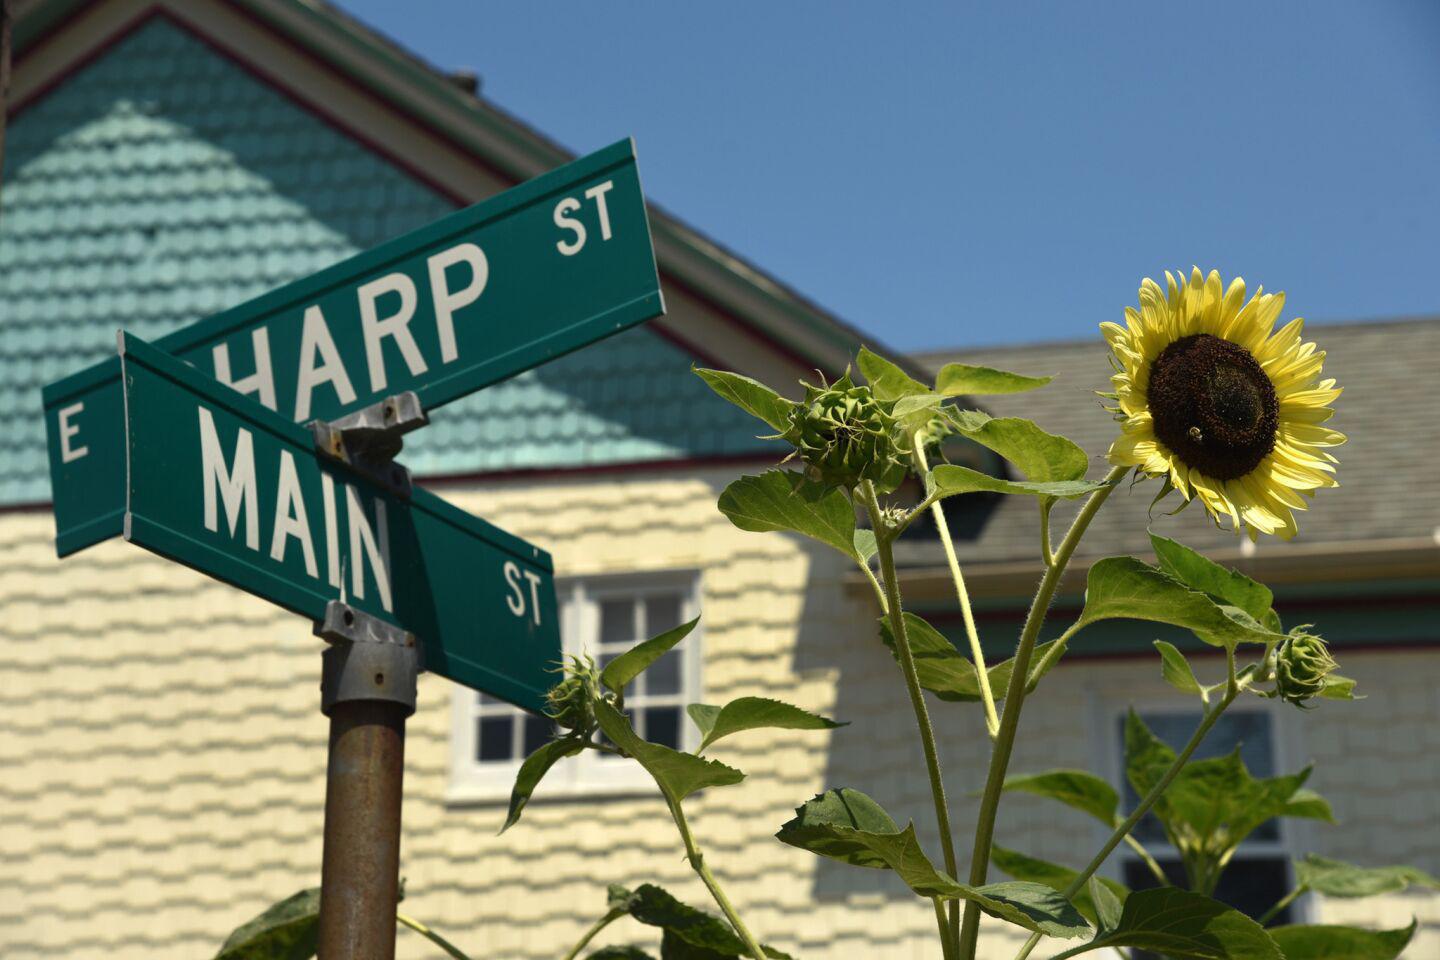 The corner of Sharp and Main Streets